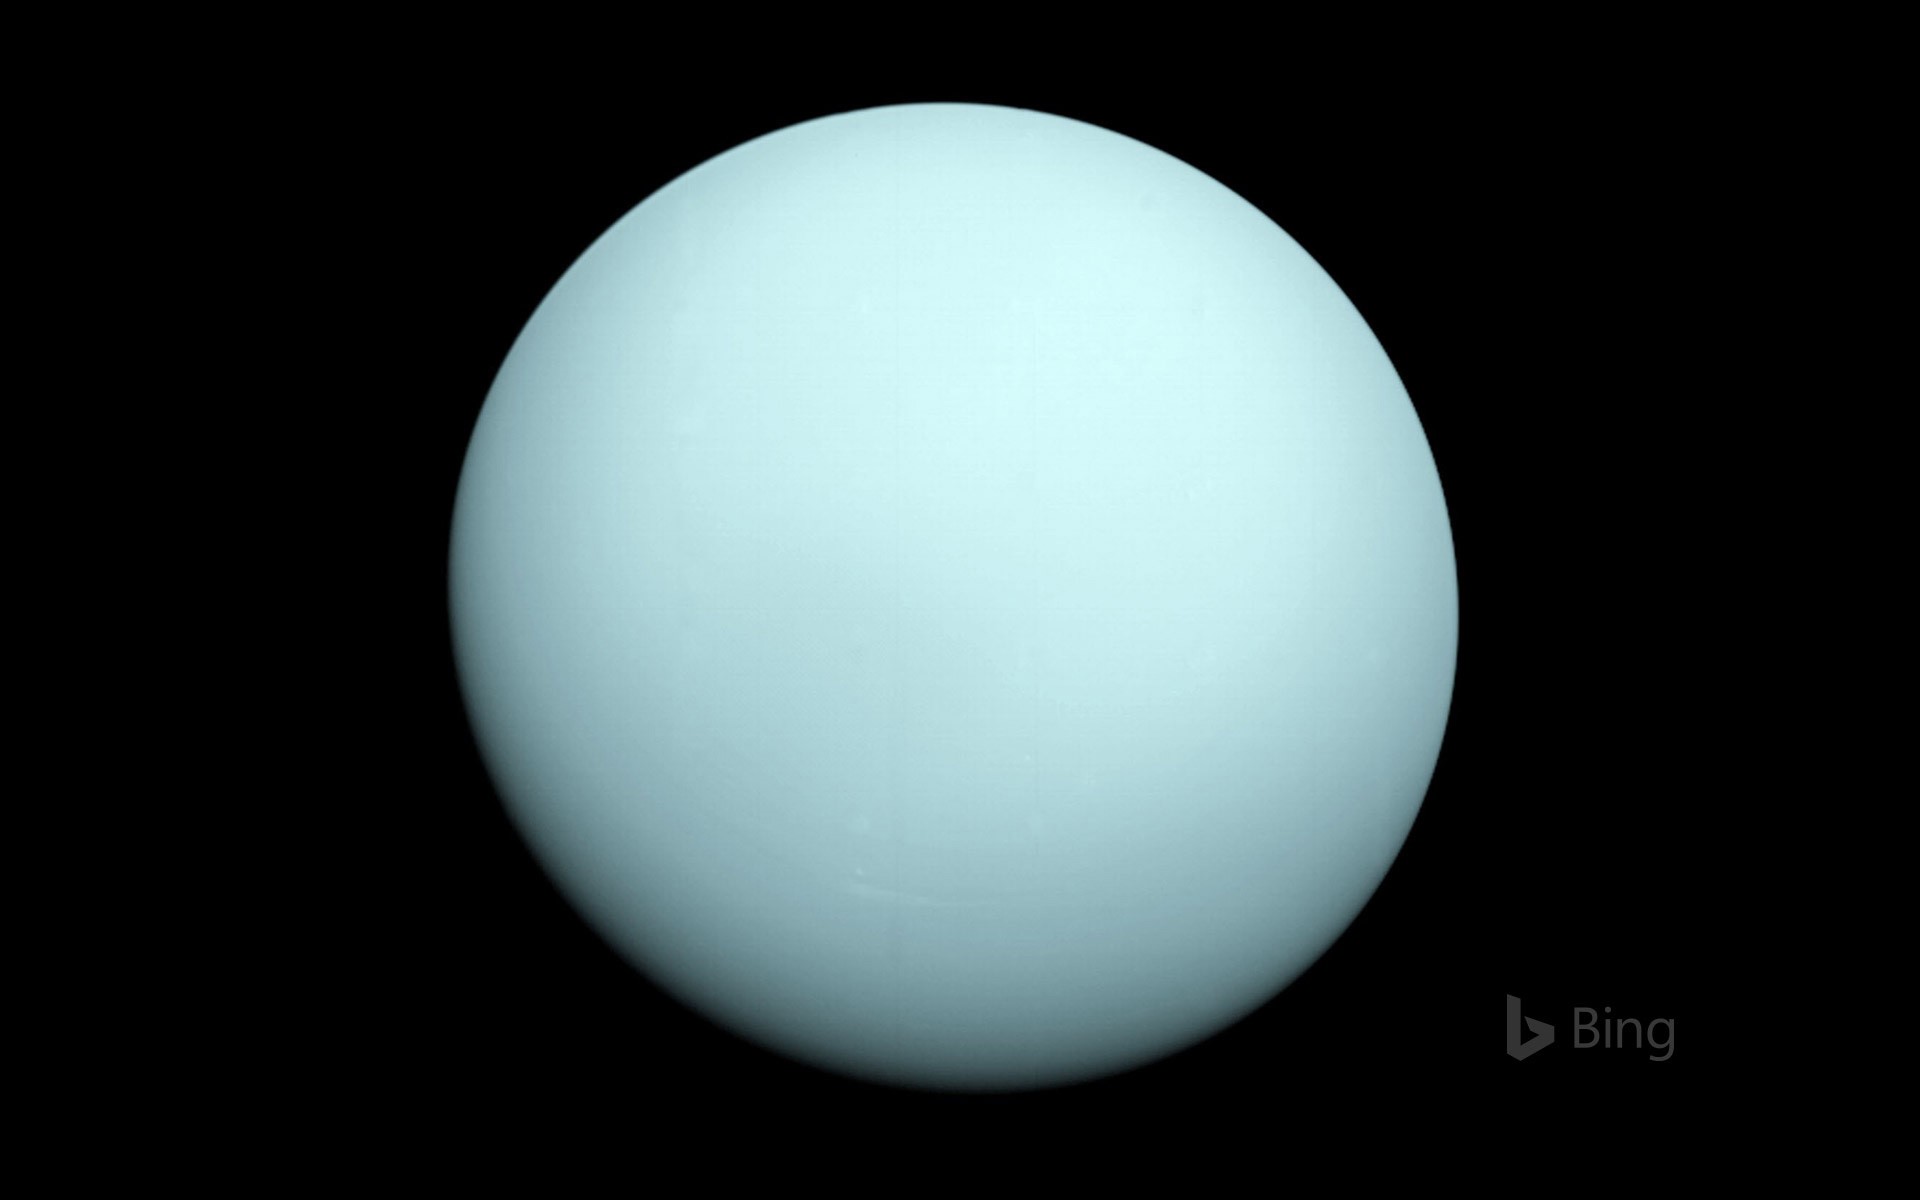 A view of Uranus taken from spacecraft Voyager 2 in 1986